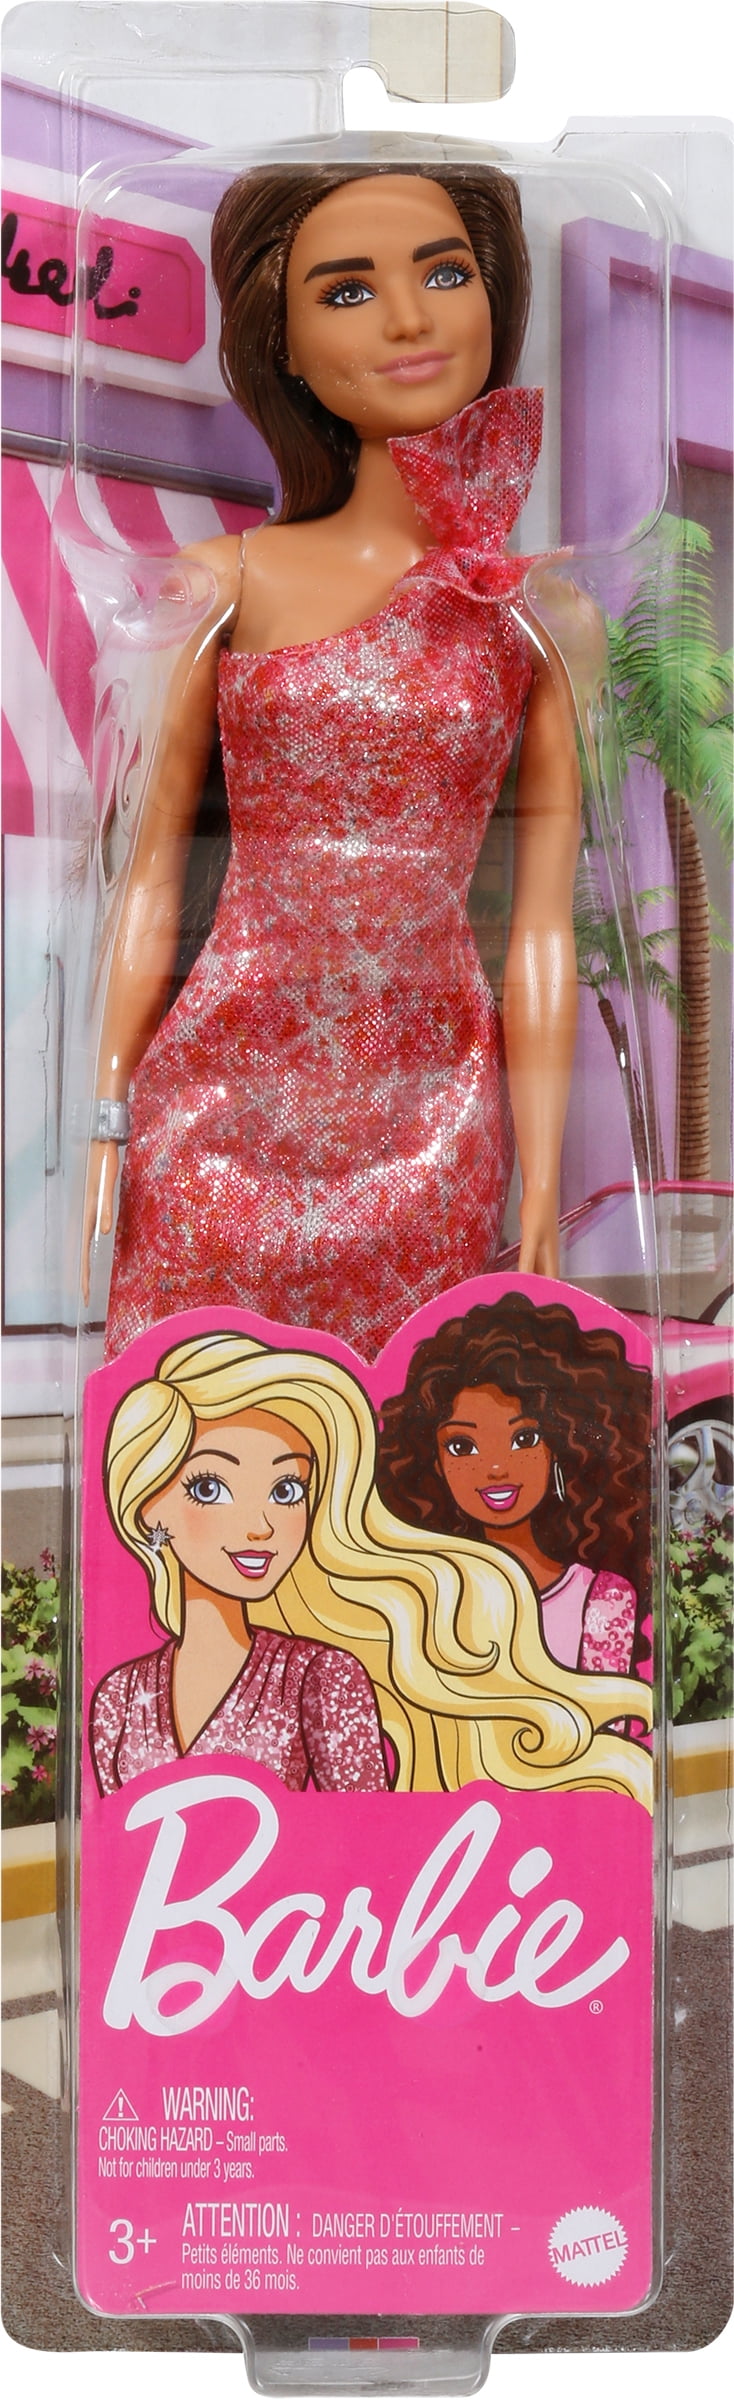 Barbie Glitz Doll With Pink Dress Mattel Dgx82 Blonde for sale online 